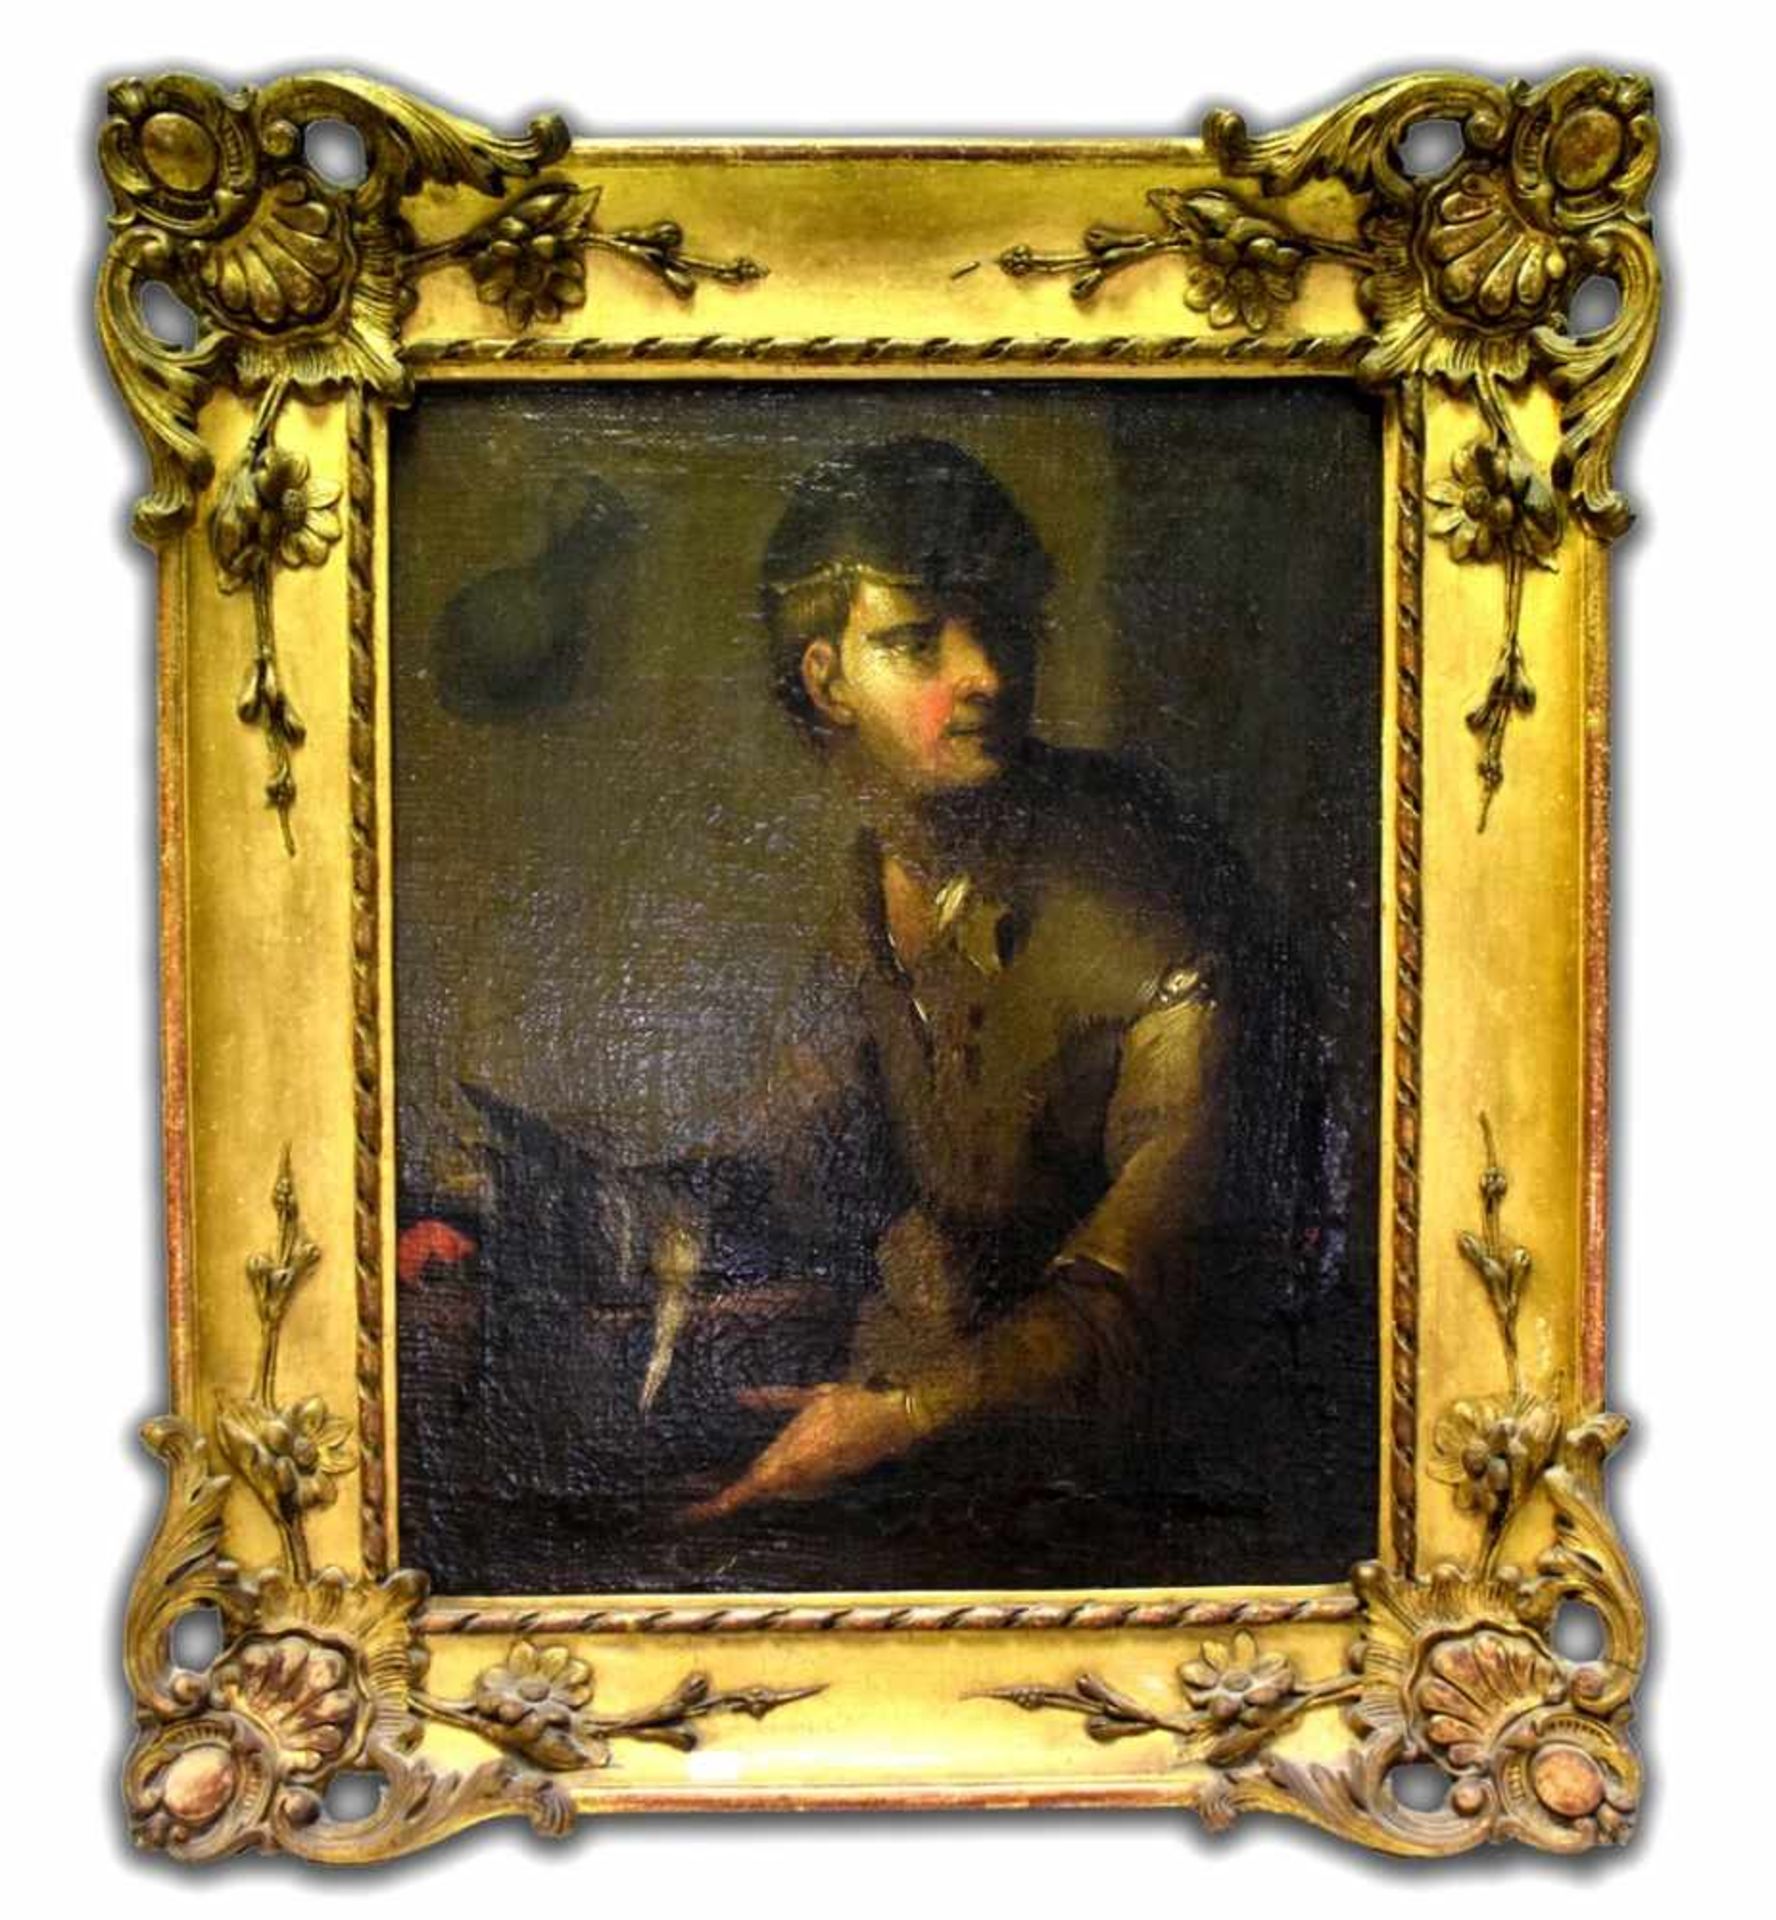 Unbekannter Maler18. Jh., Junge mit Vögeln, Öl/Lwd., 36 X 44 cm, dek. Goldrahmen